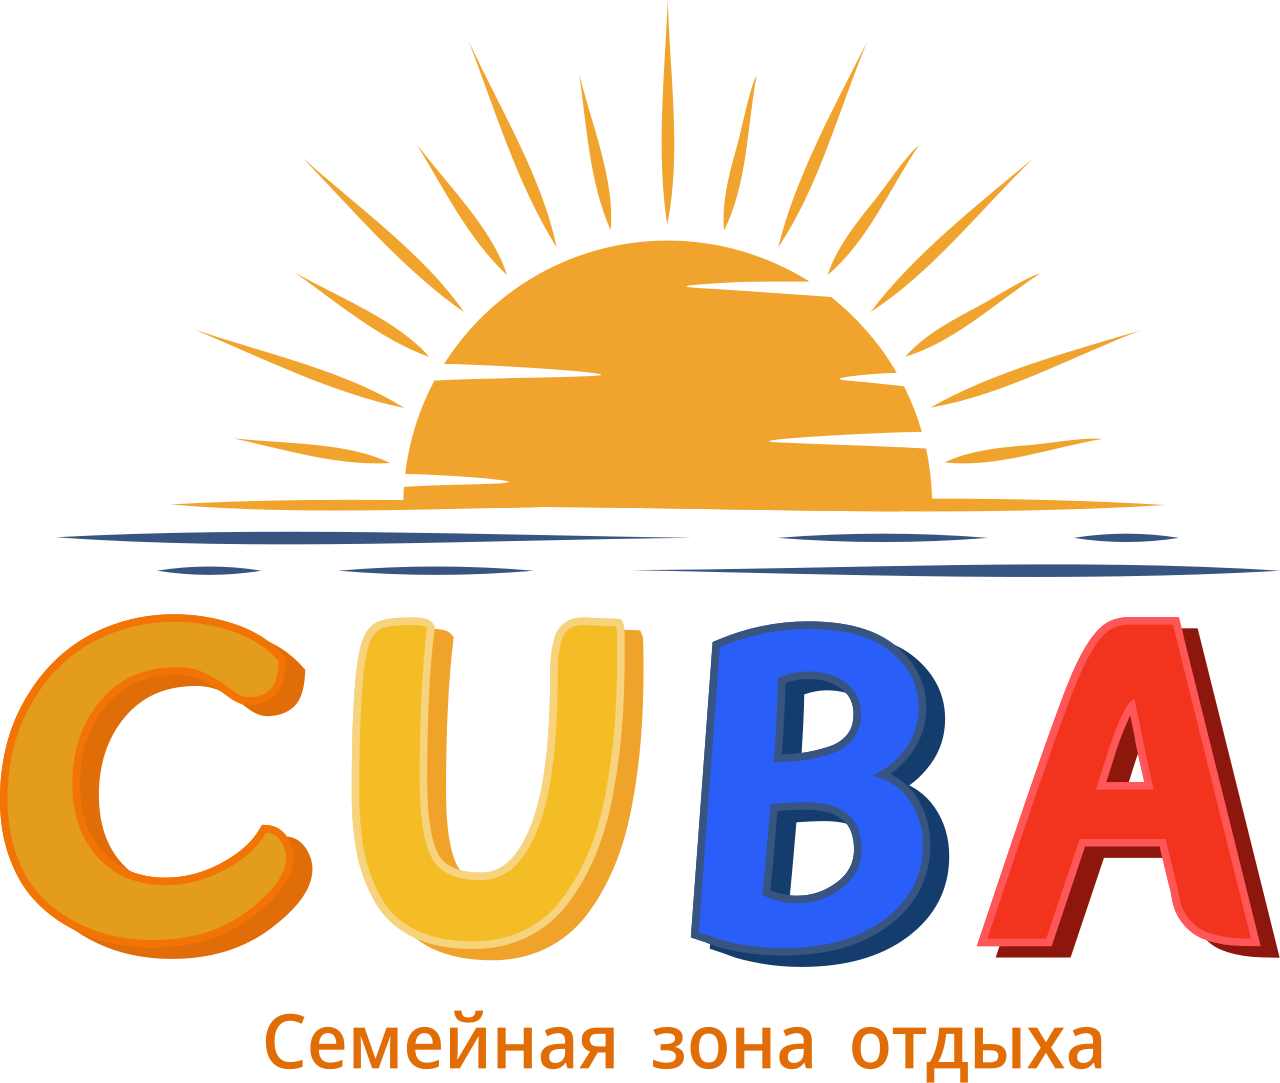 CUBA Алаколь's logo